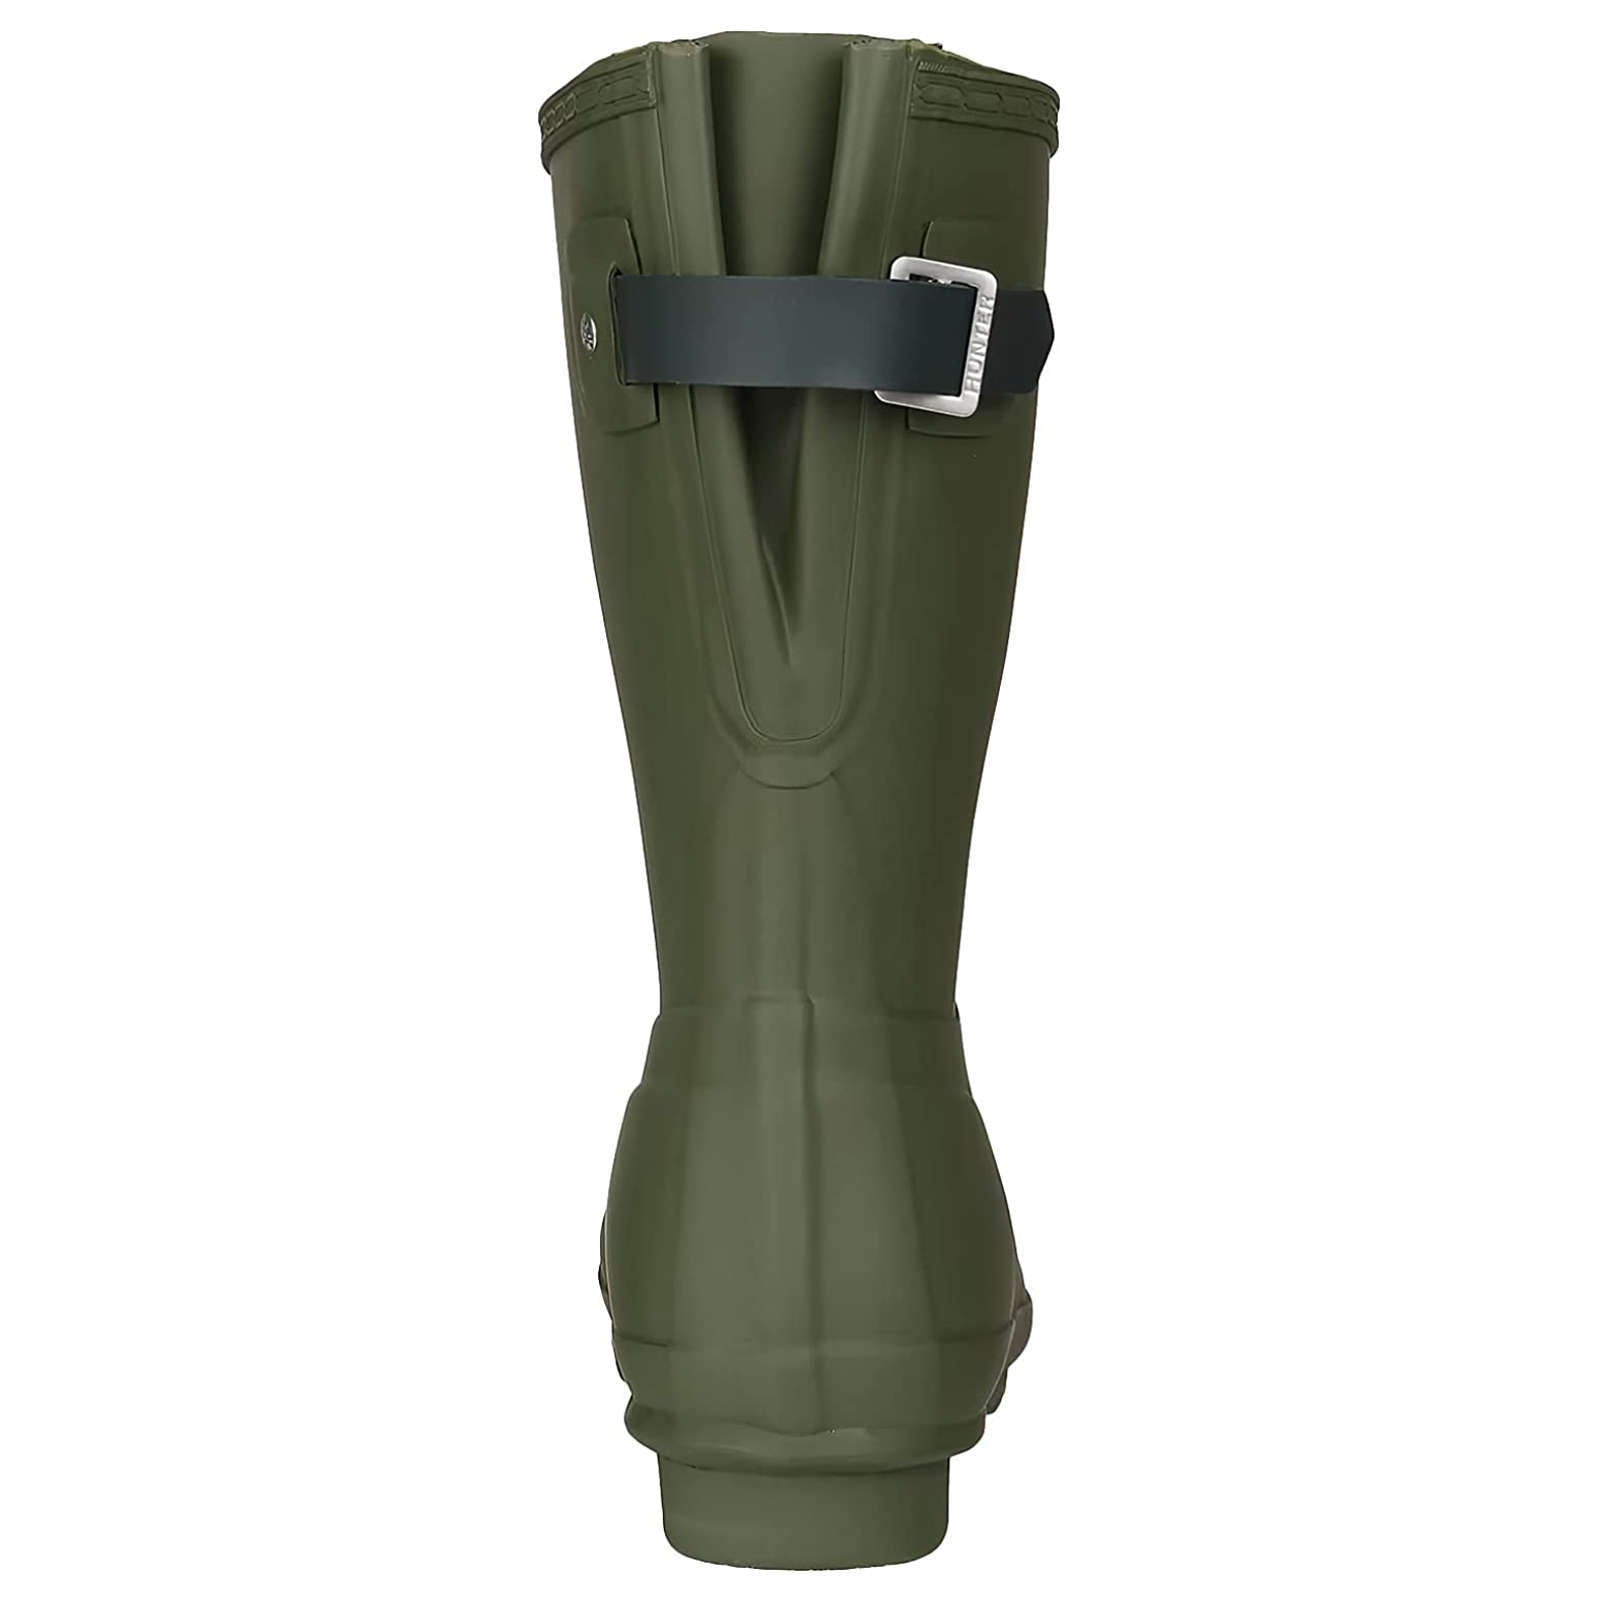 Hunter Original Back Adjustable Short Rubber Women's Short Wellington Boots#color_ismarken olive artic moss